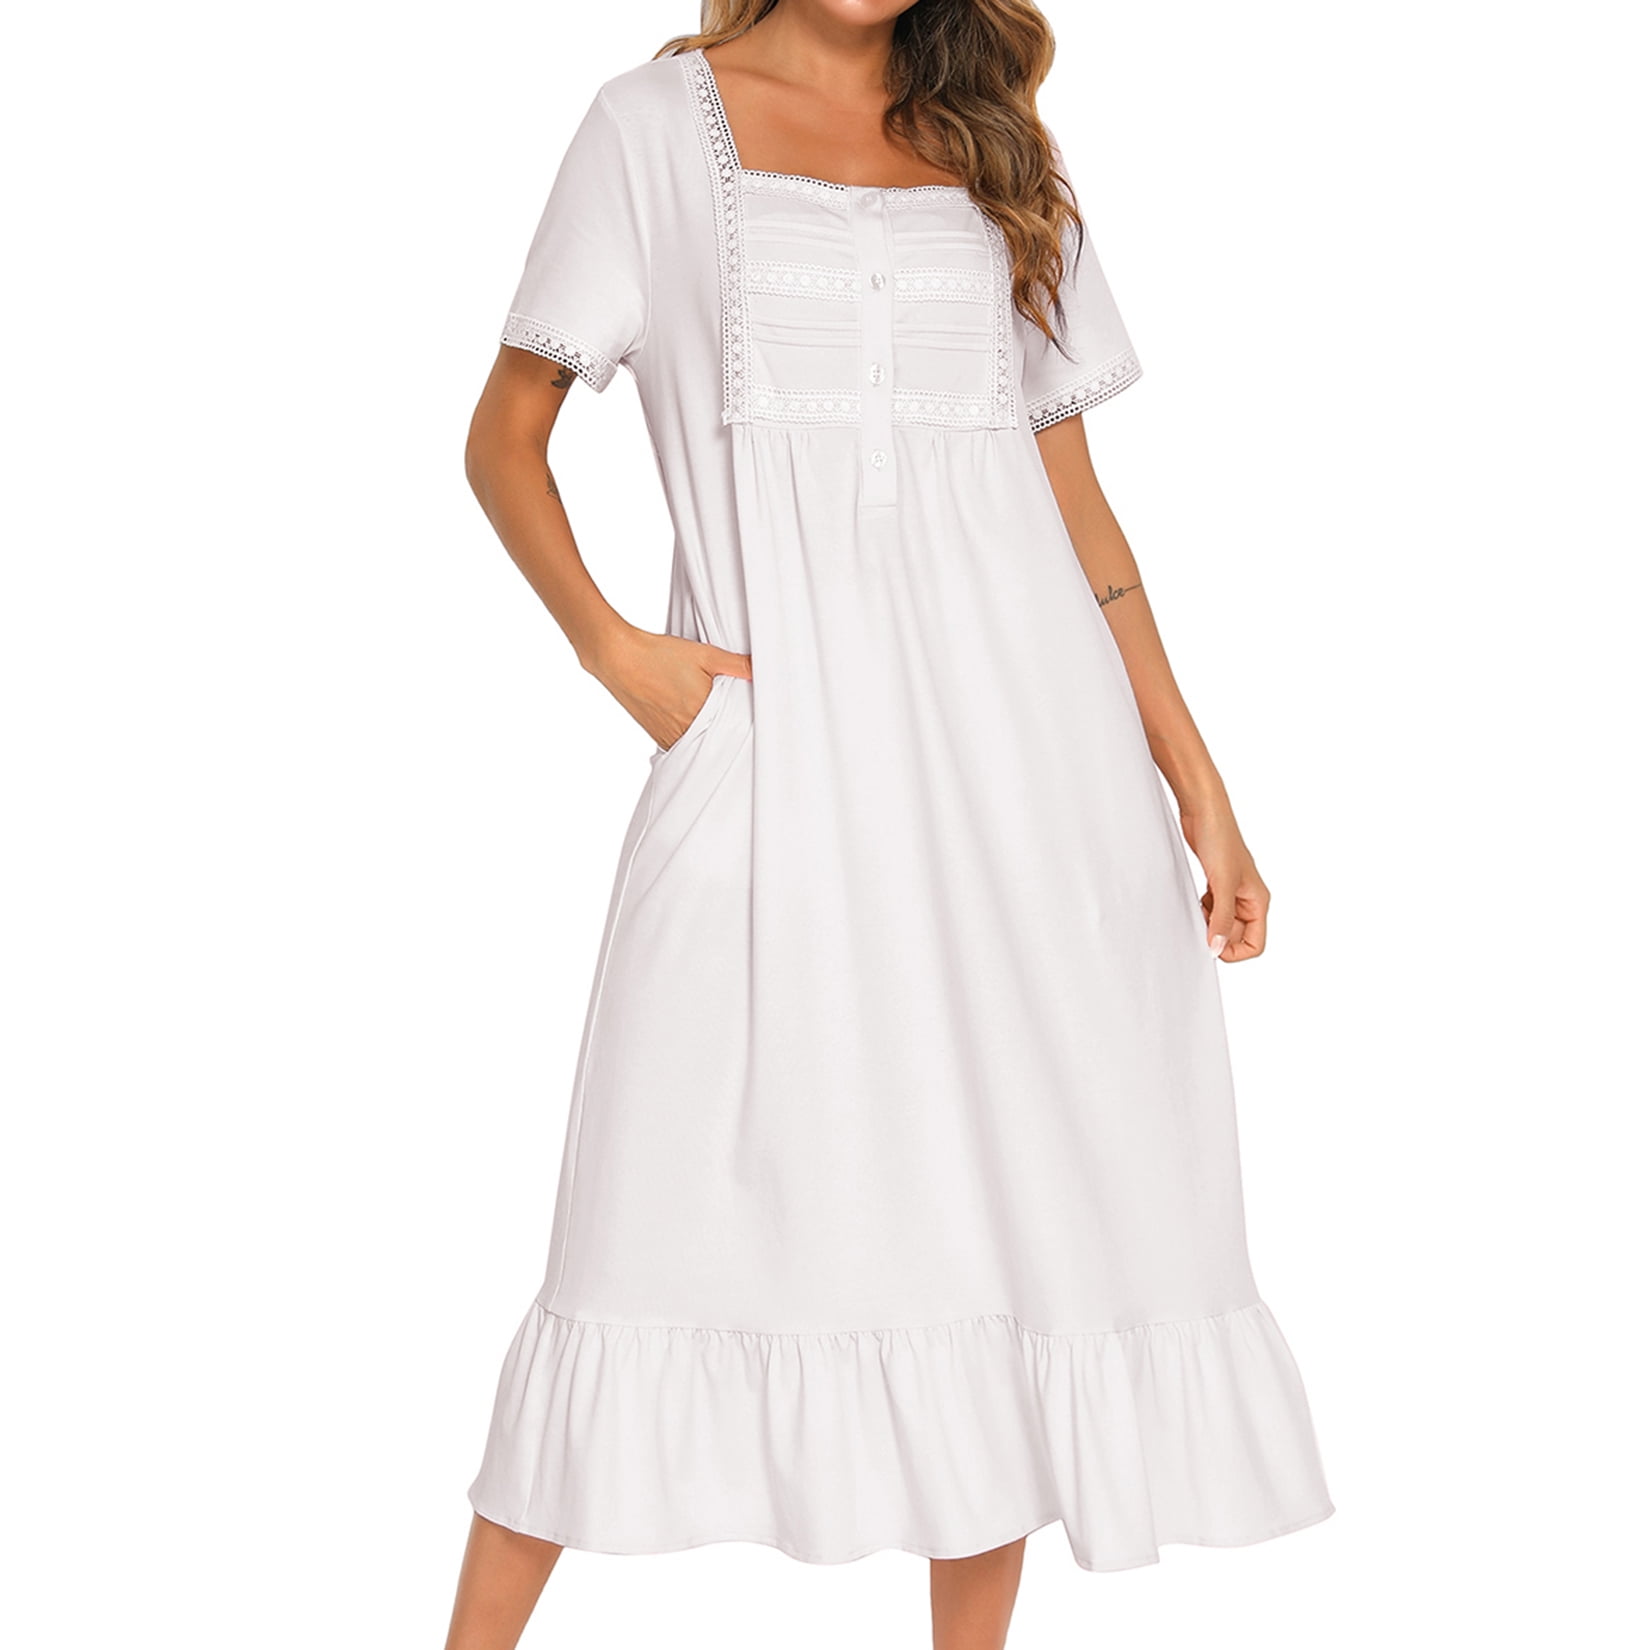 Homgro Women's Cotton Victorian Nightgown Short Sleeve Sleep Dress ...